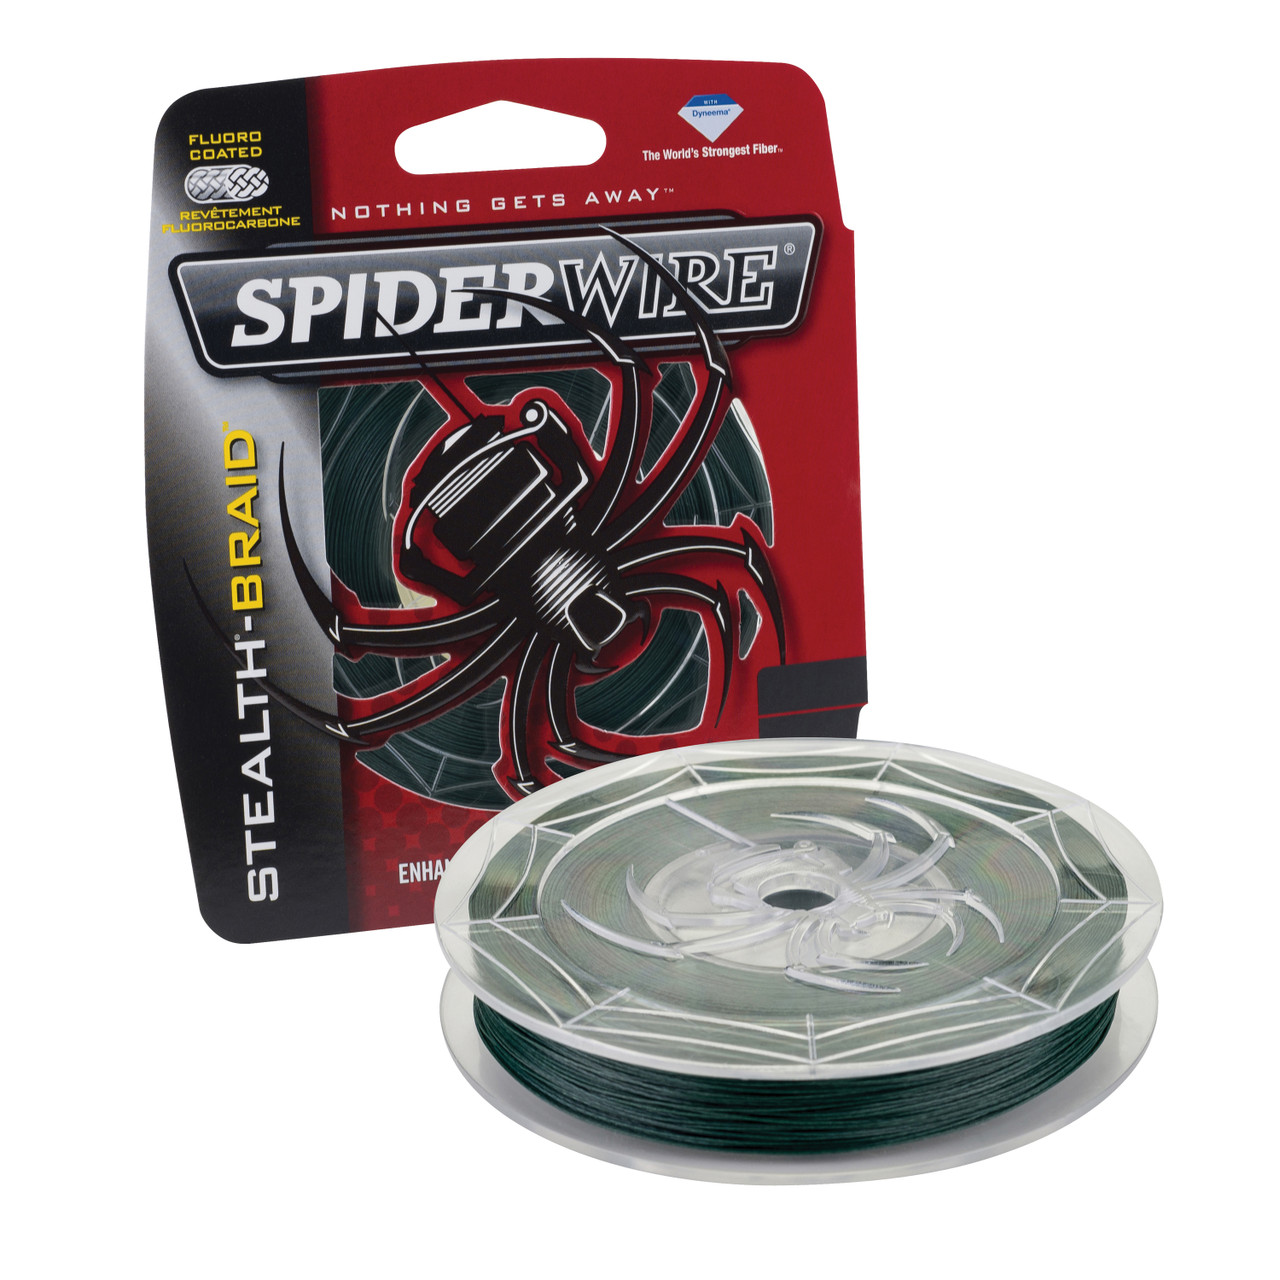 Spiderwire - Stealth Braid, Moss Green - 8 lb, 500 Yards